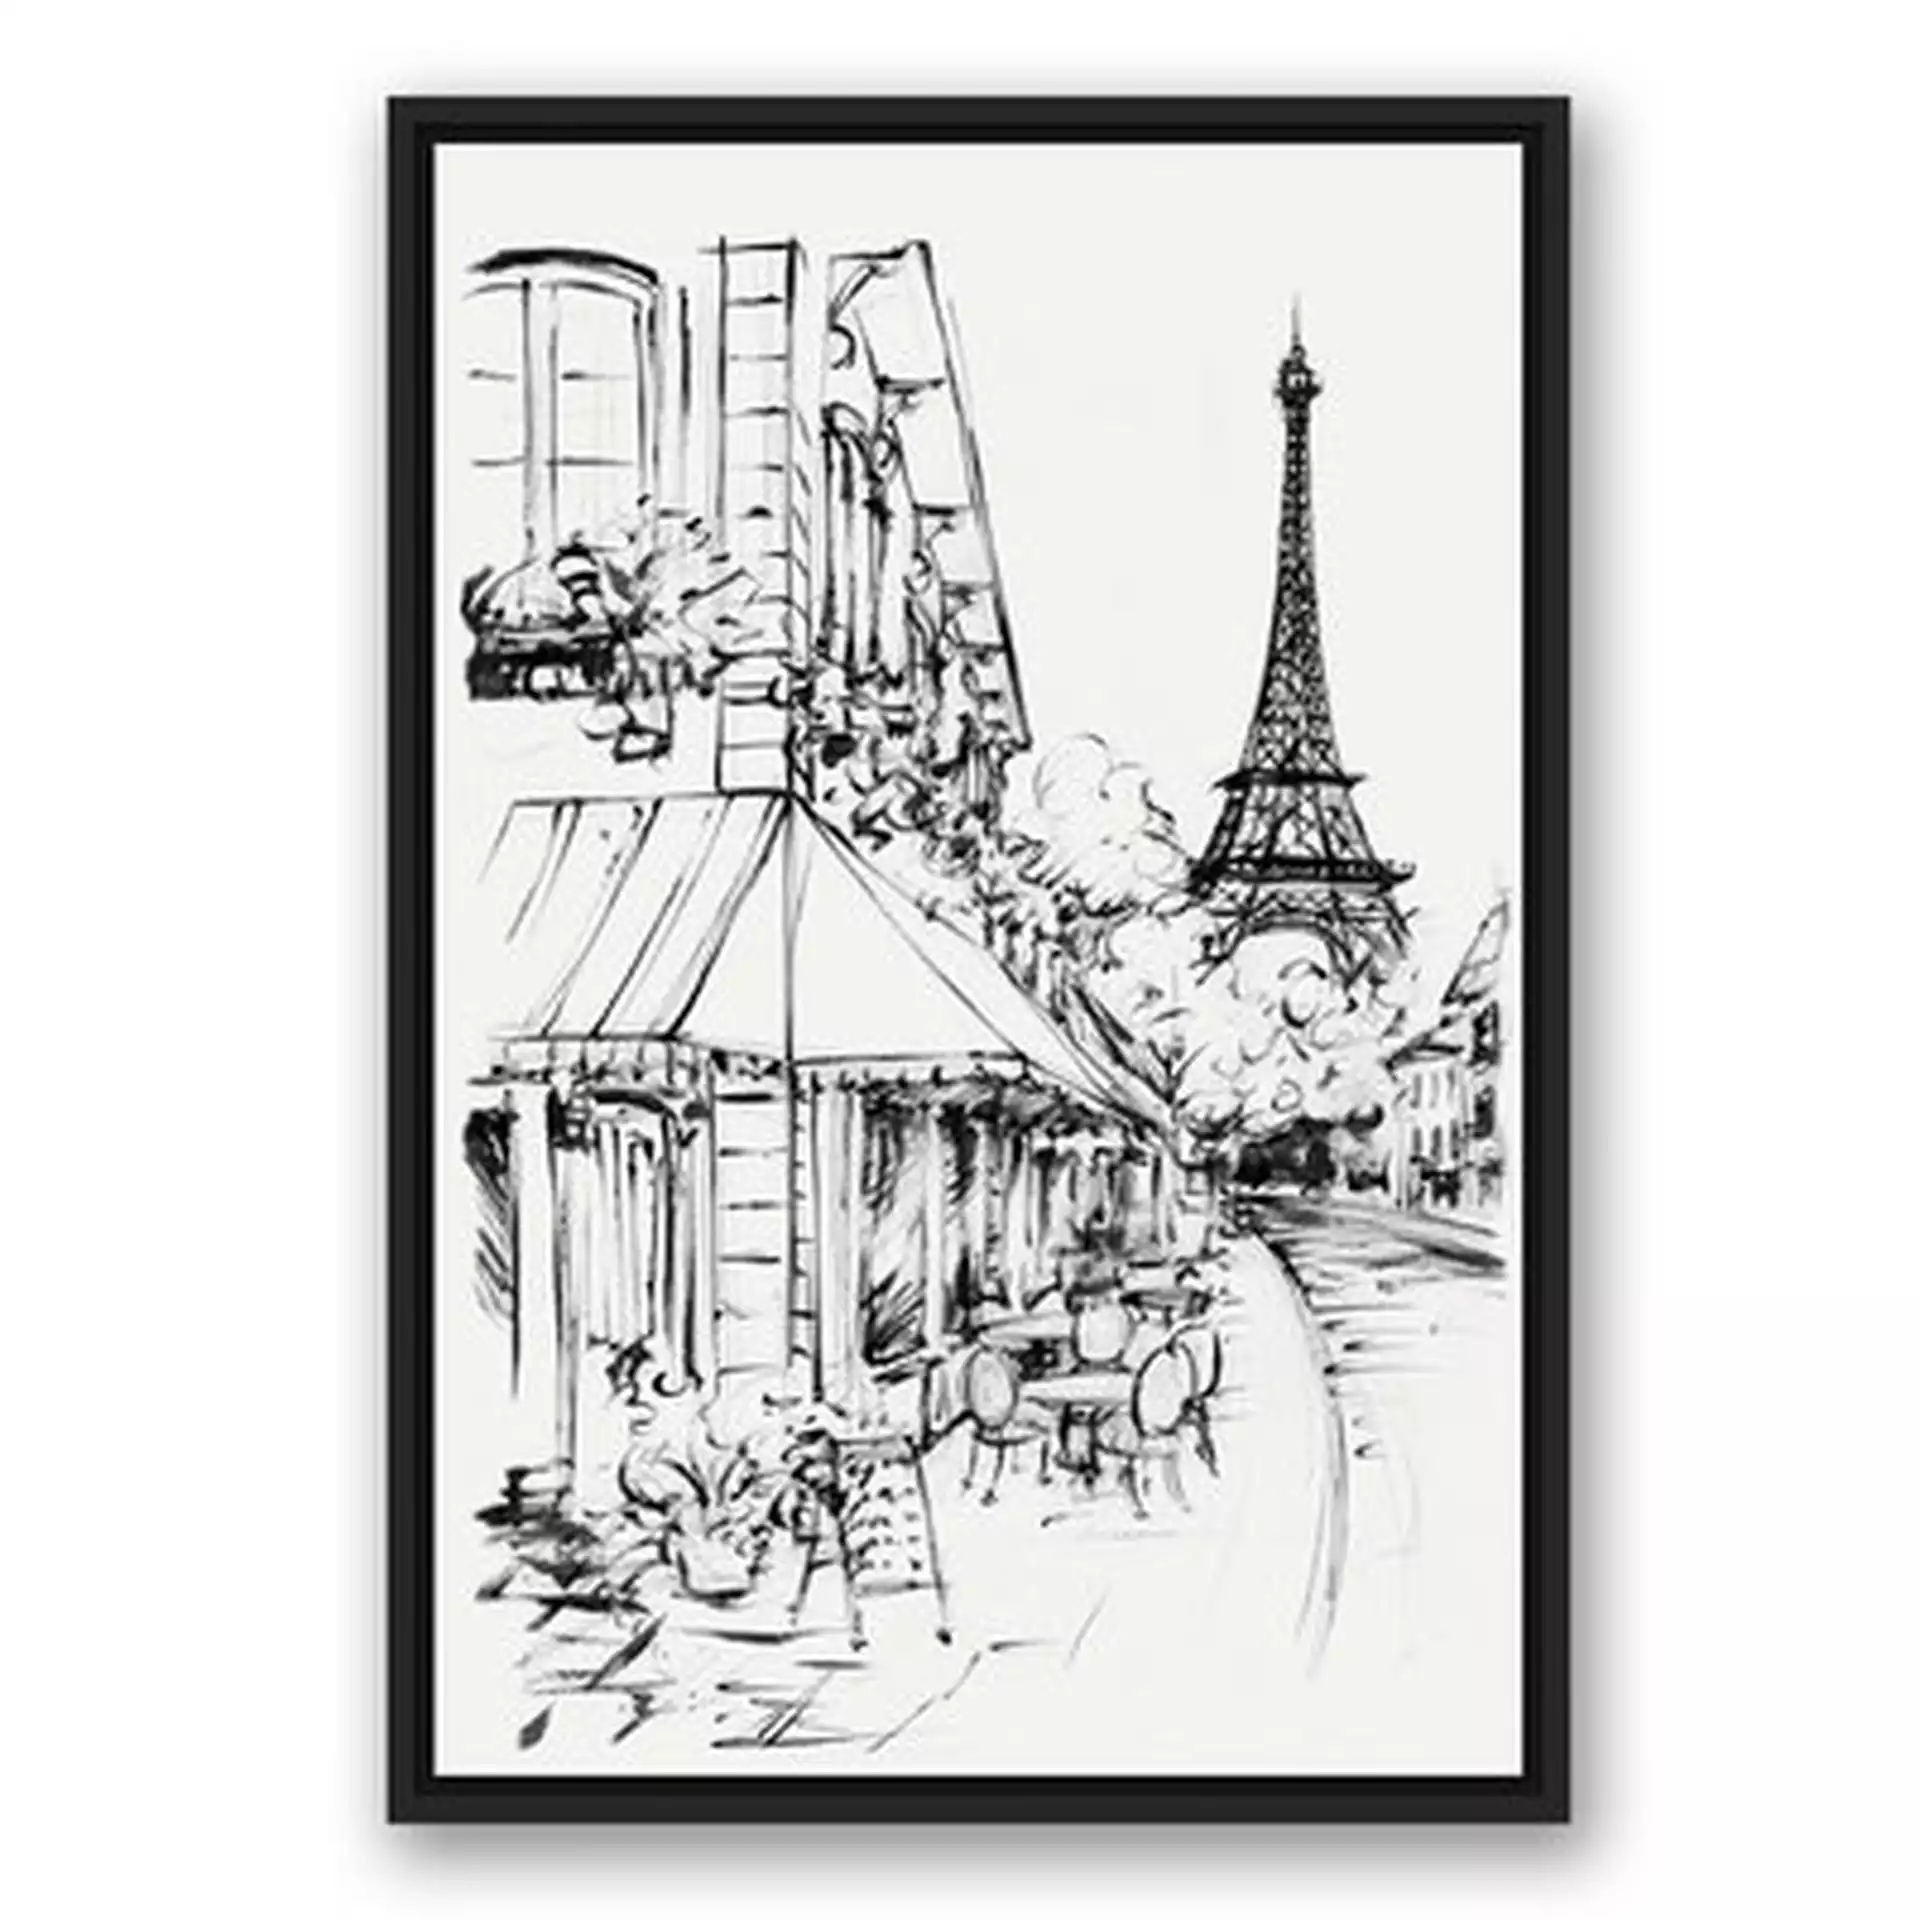 'Paris Street Sketch' Framed Drawing Print on Canvas